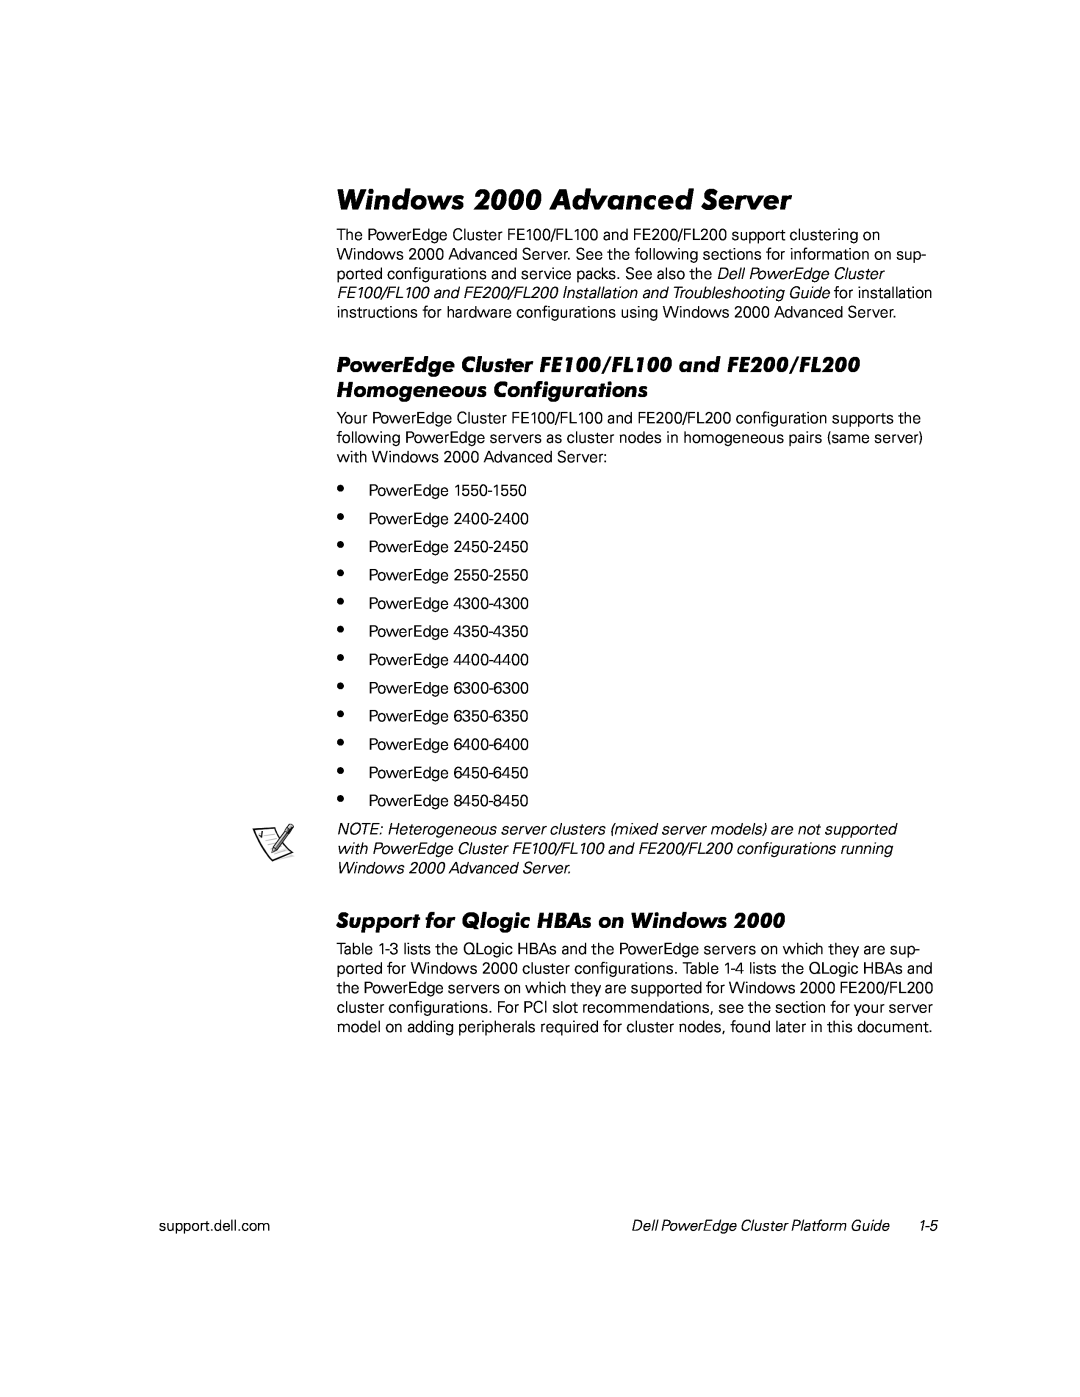 Dell FL100, FE100, FE200, FL200 Windows 2000 Advanced Server, Support for Qlogic HBAs on Windows, • • • • • • • • • • • • 